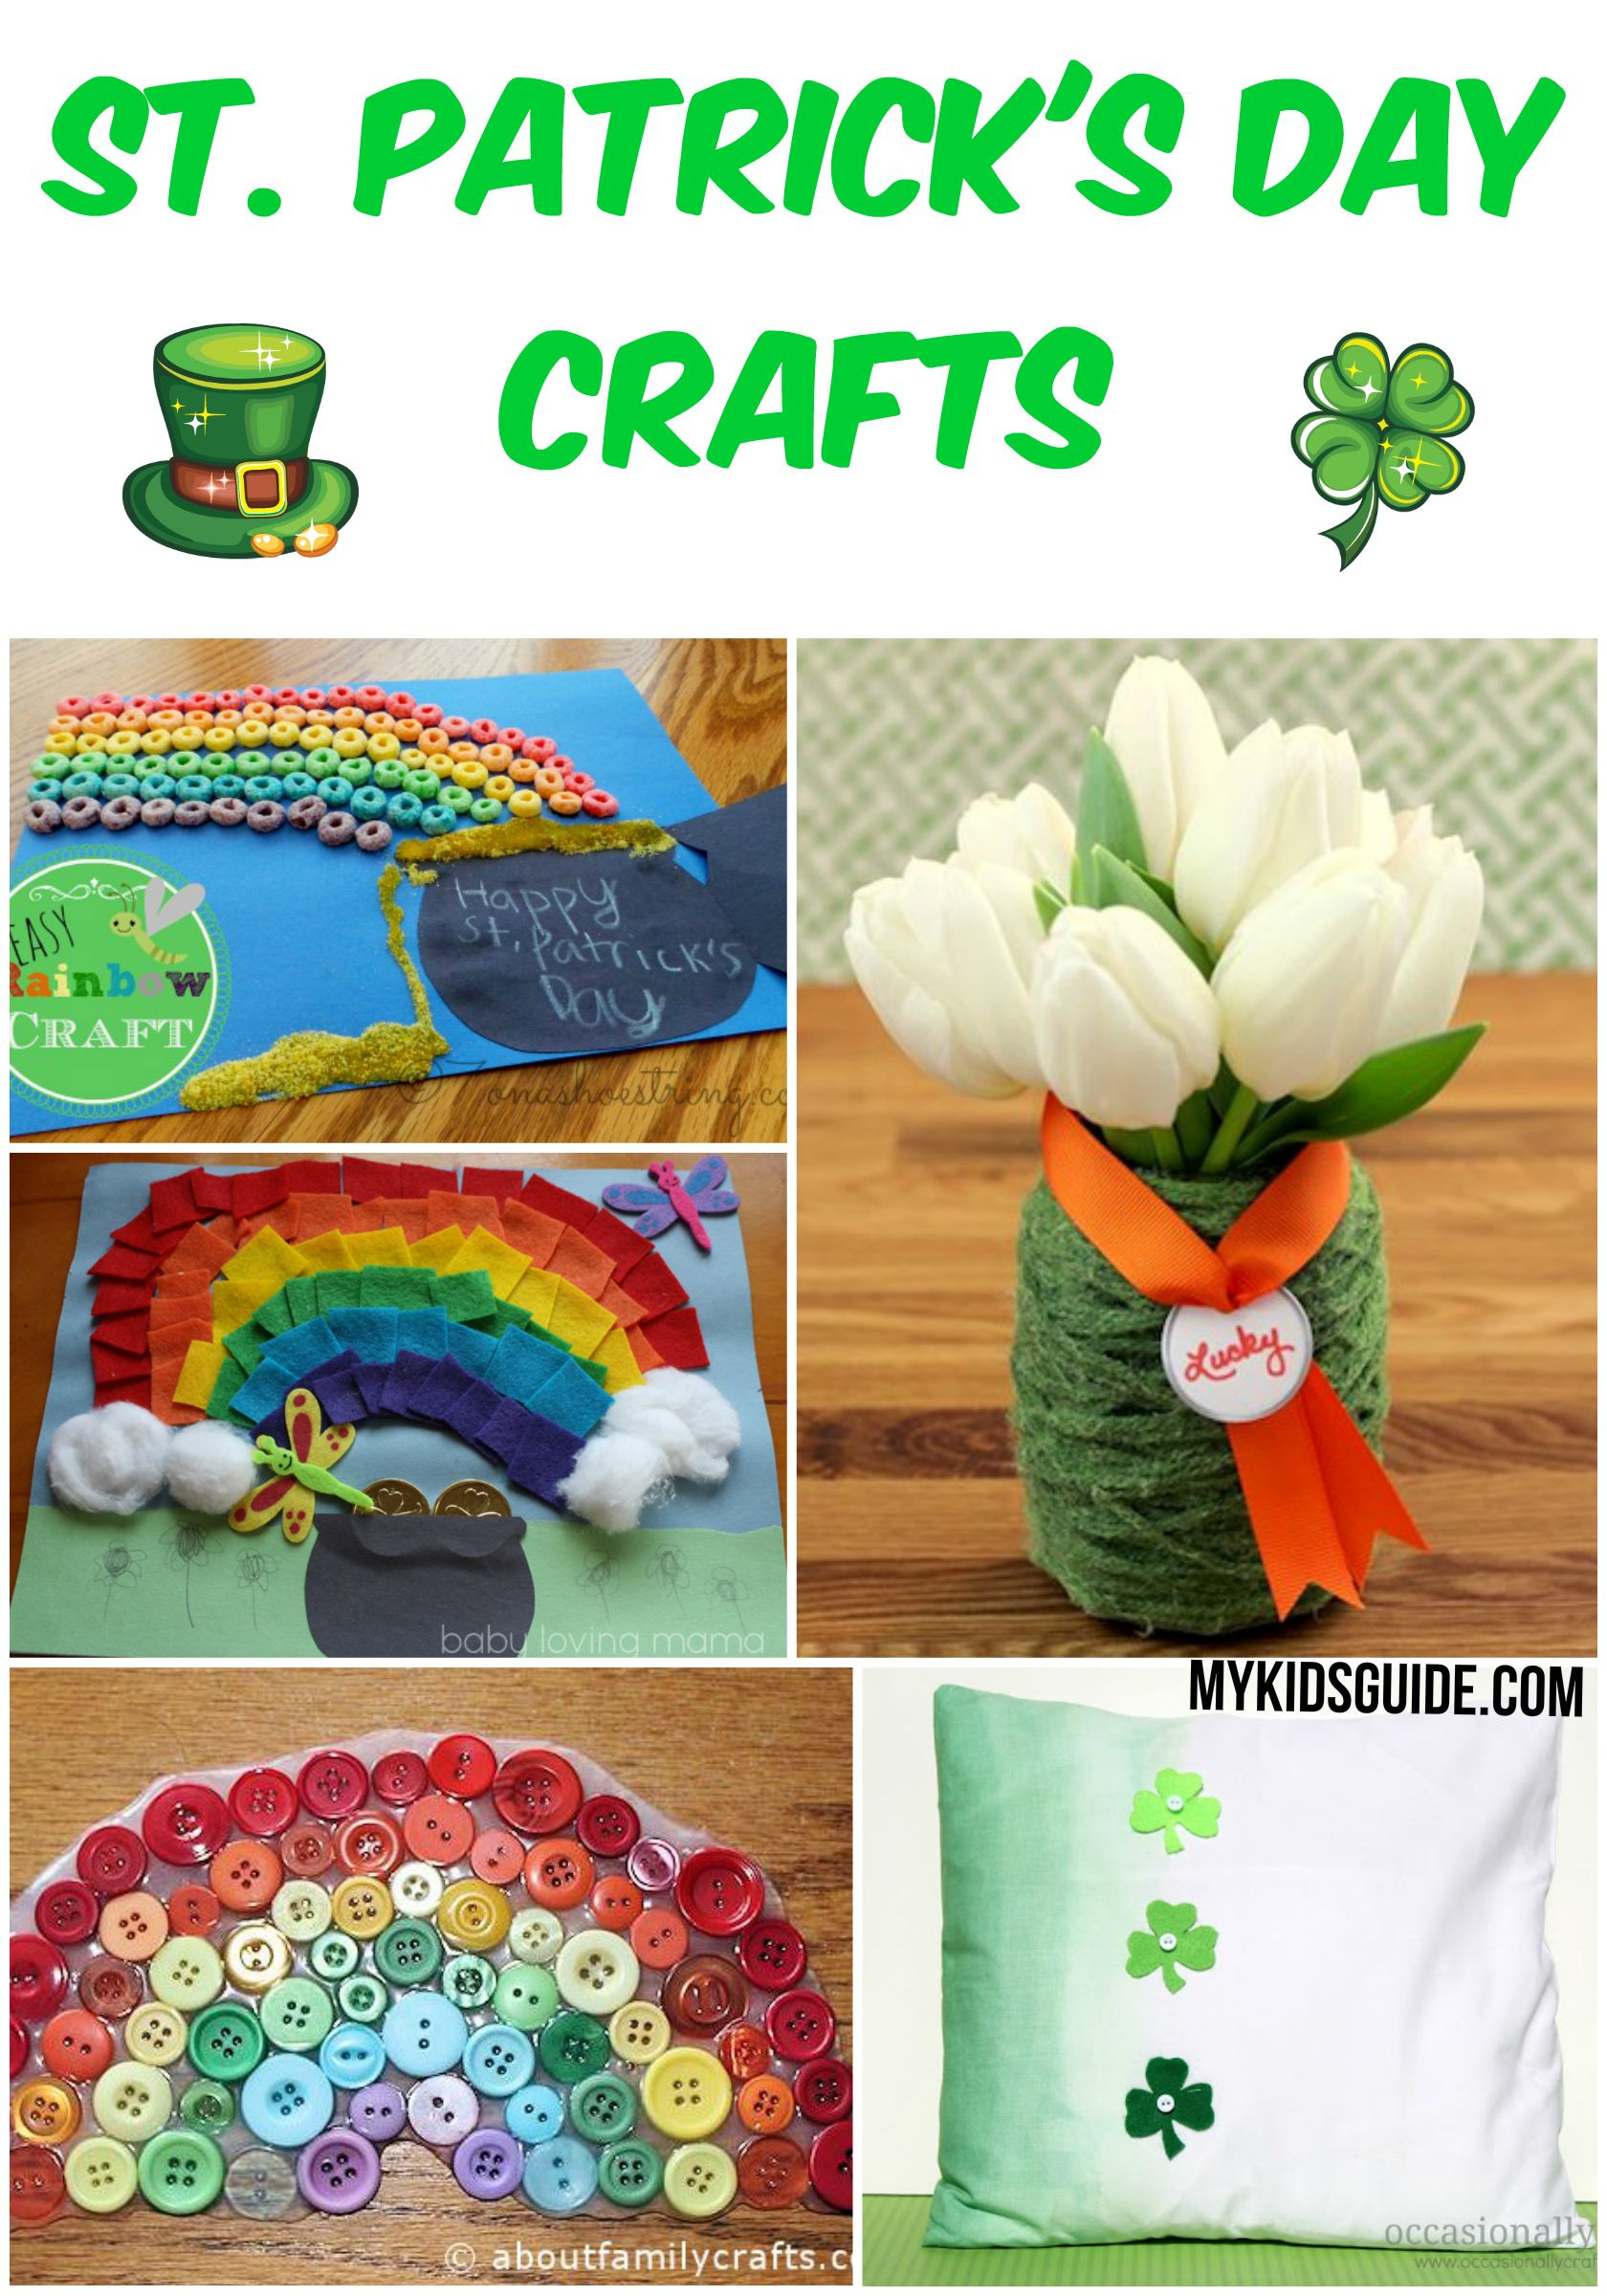 Pinterest St Patrick's Day Crafts
 11 Easy St Patrick s Day Crafts for Kids My Kids Guide